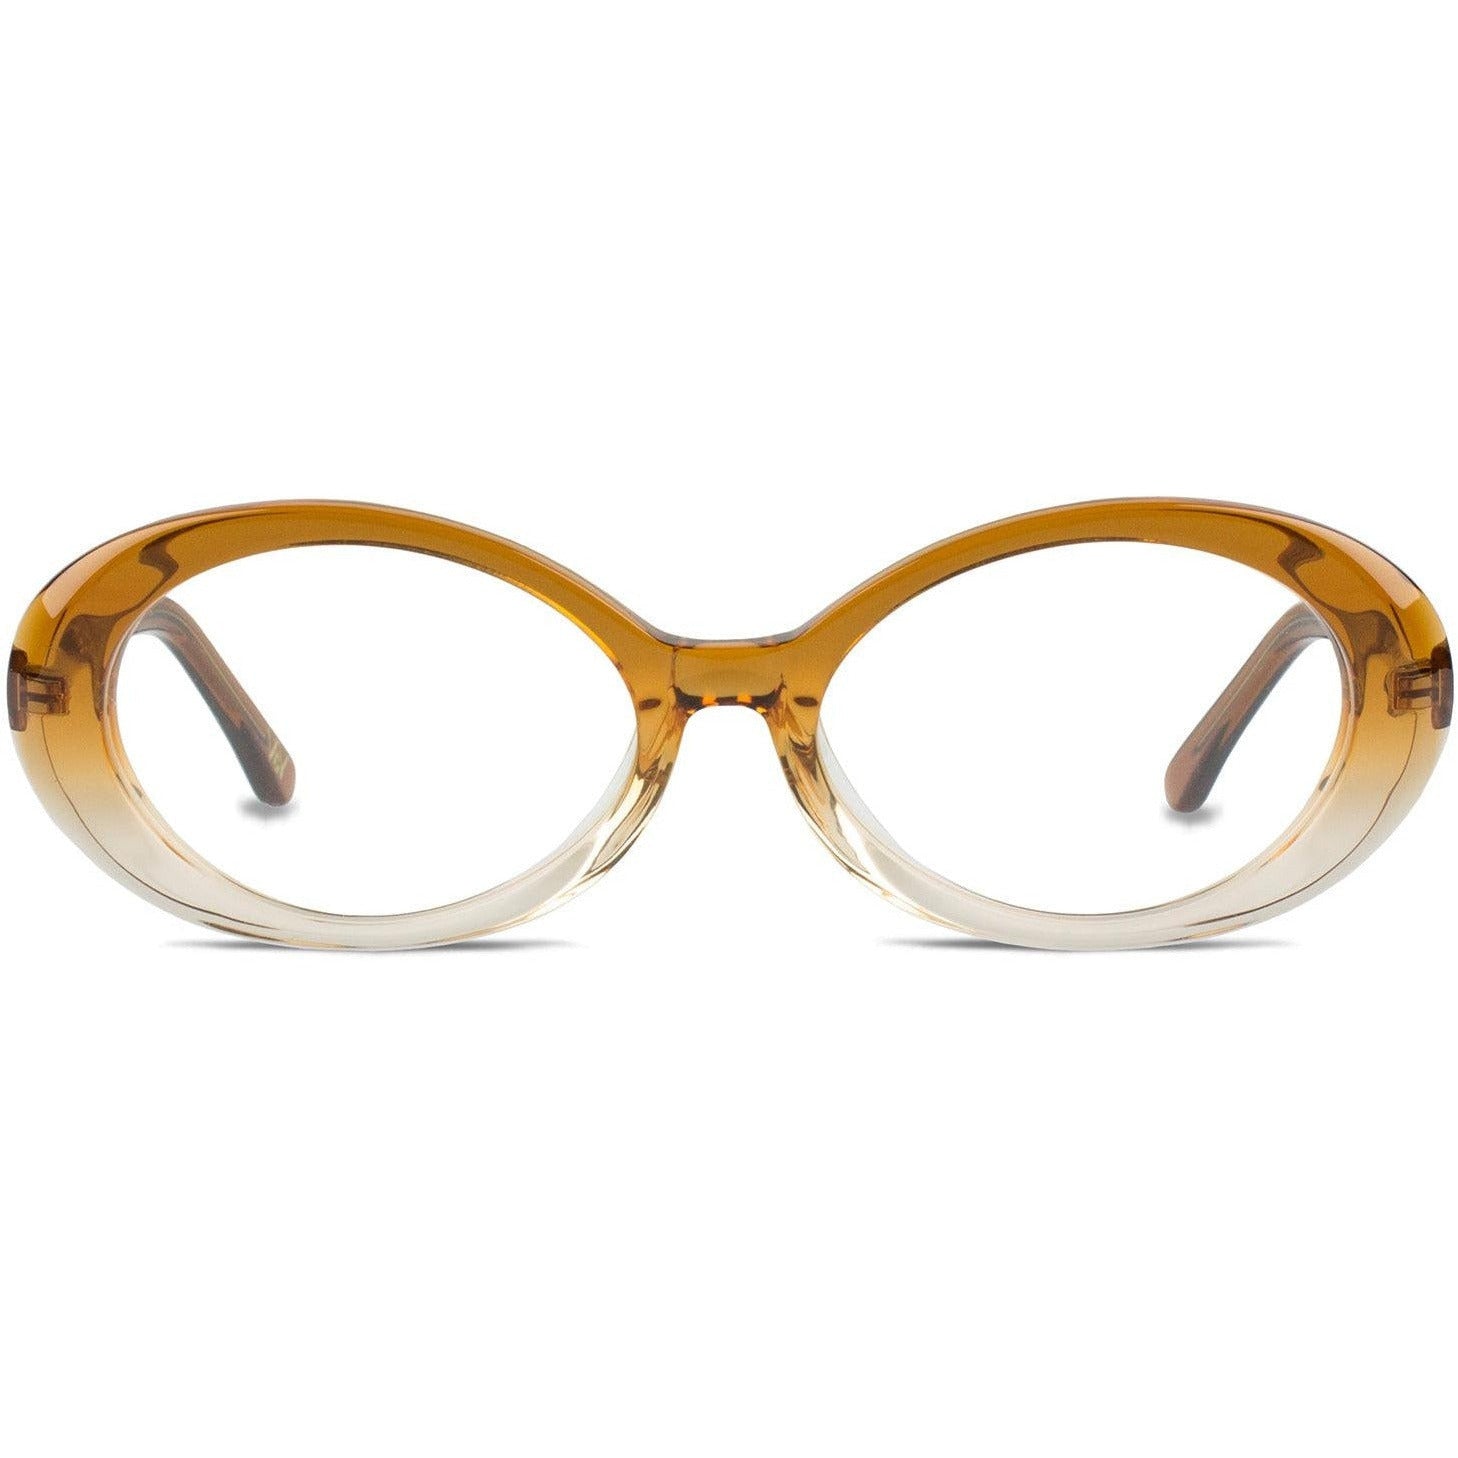 Explore 2023's Women's and Men's Glasses Trends - GlassesUSA.com